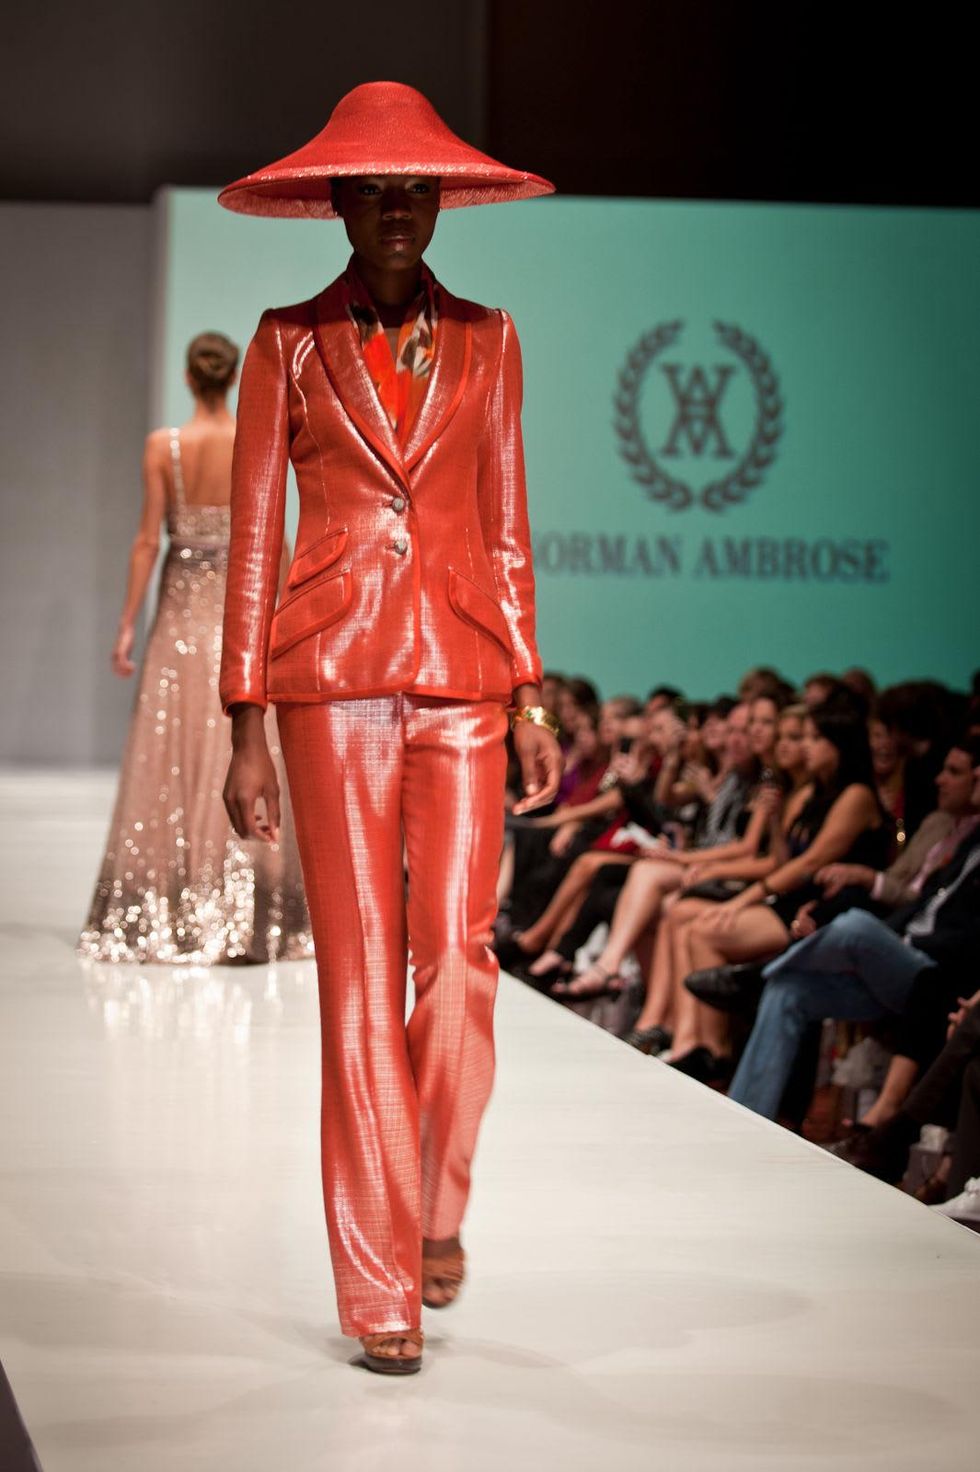 News_Fashion Houston_October 2011_Norman Ambrose